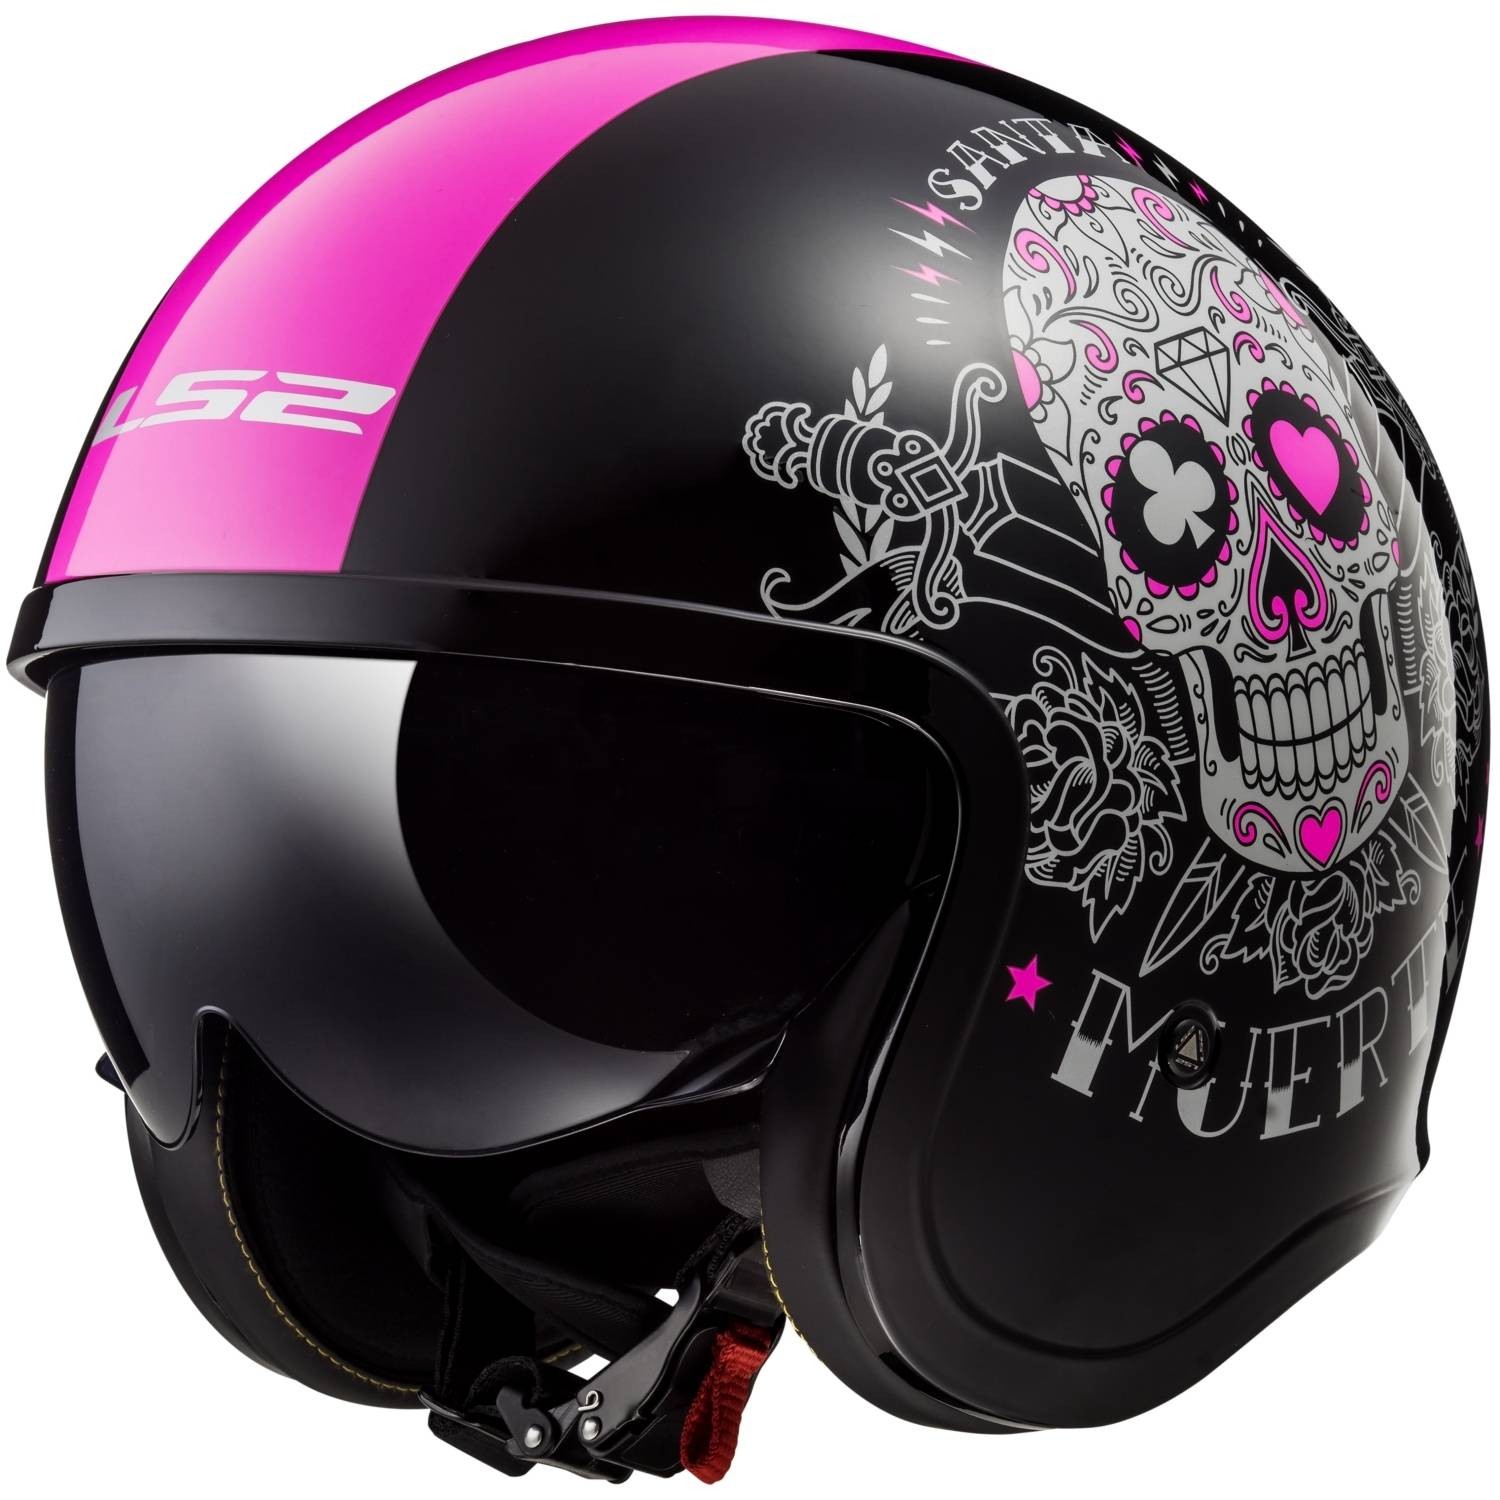 Shocking Ideas Of women's motorcycle helmet canada Ideas